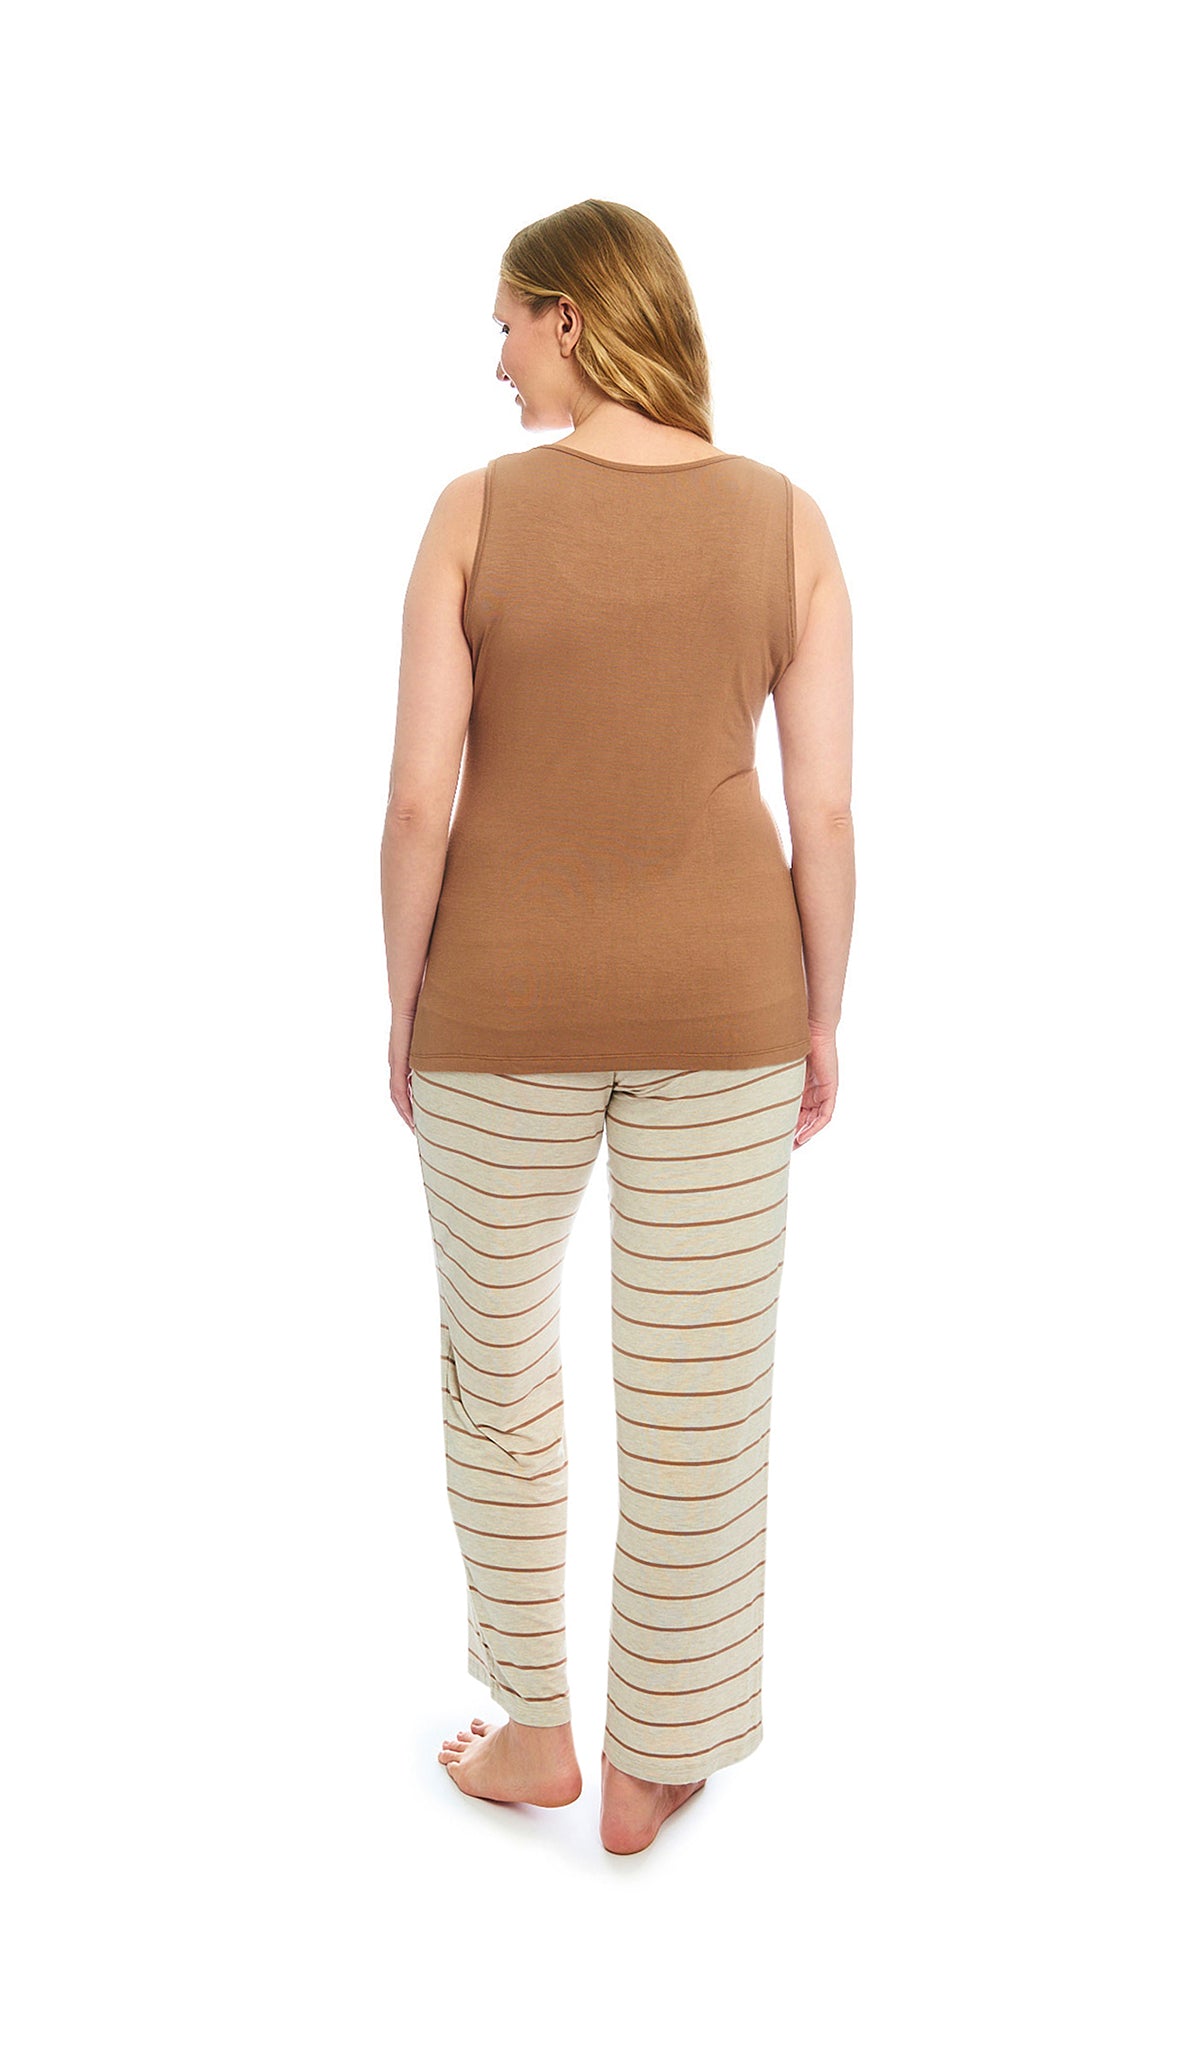 Mocha Stripe Analise 3-Piece Set, back shot of woman wearing tank top and pant.